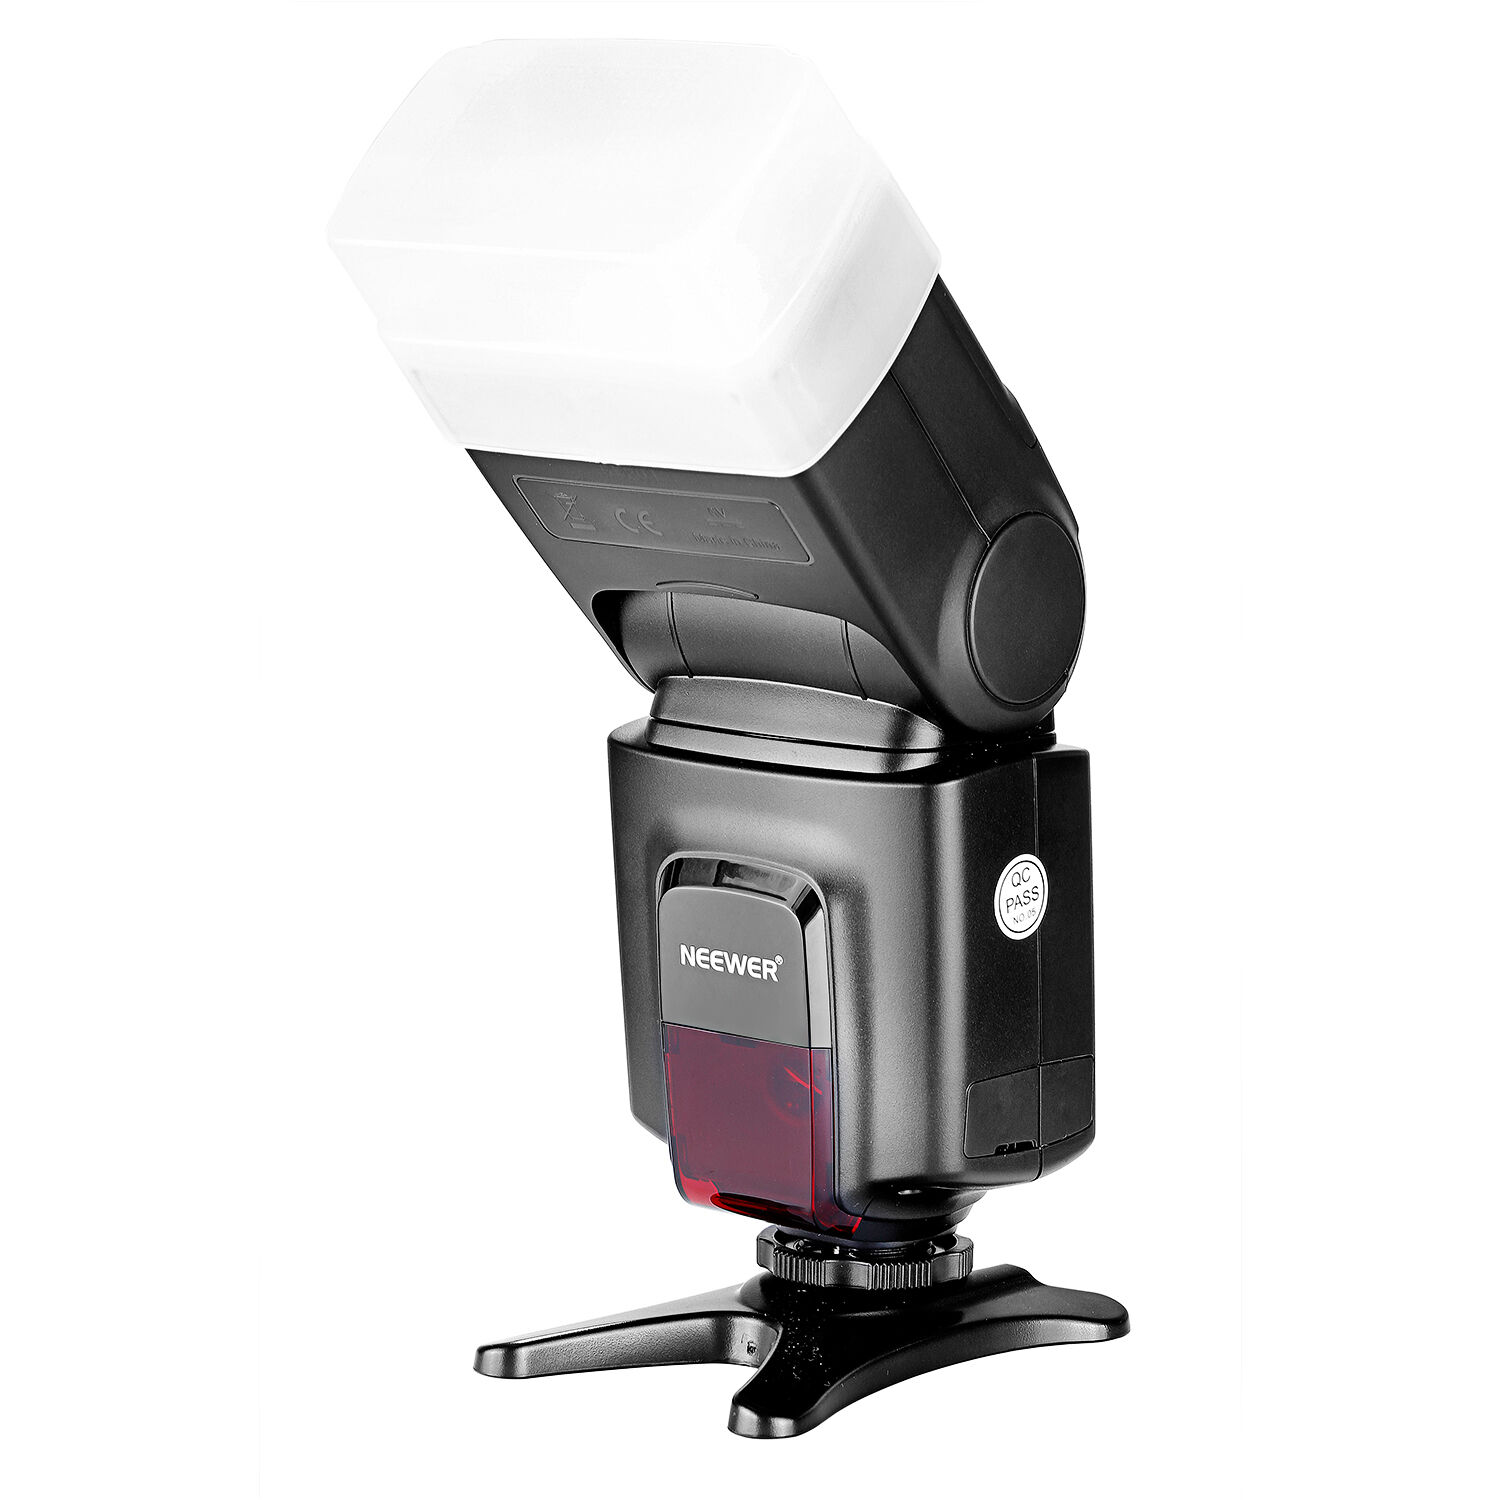 Neewer Camera Flash Bounce Light Hard Diffuser For Neewer Tt560 Flash Speedlite